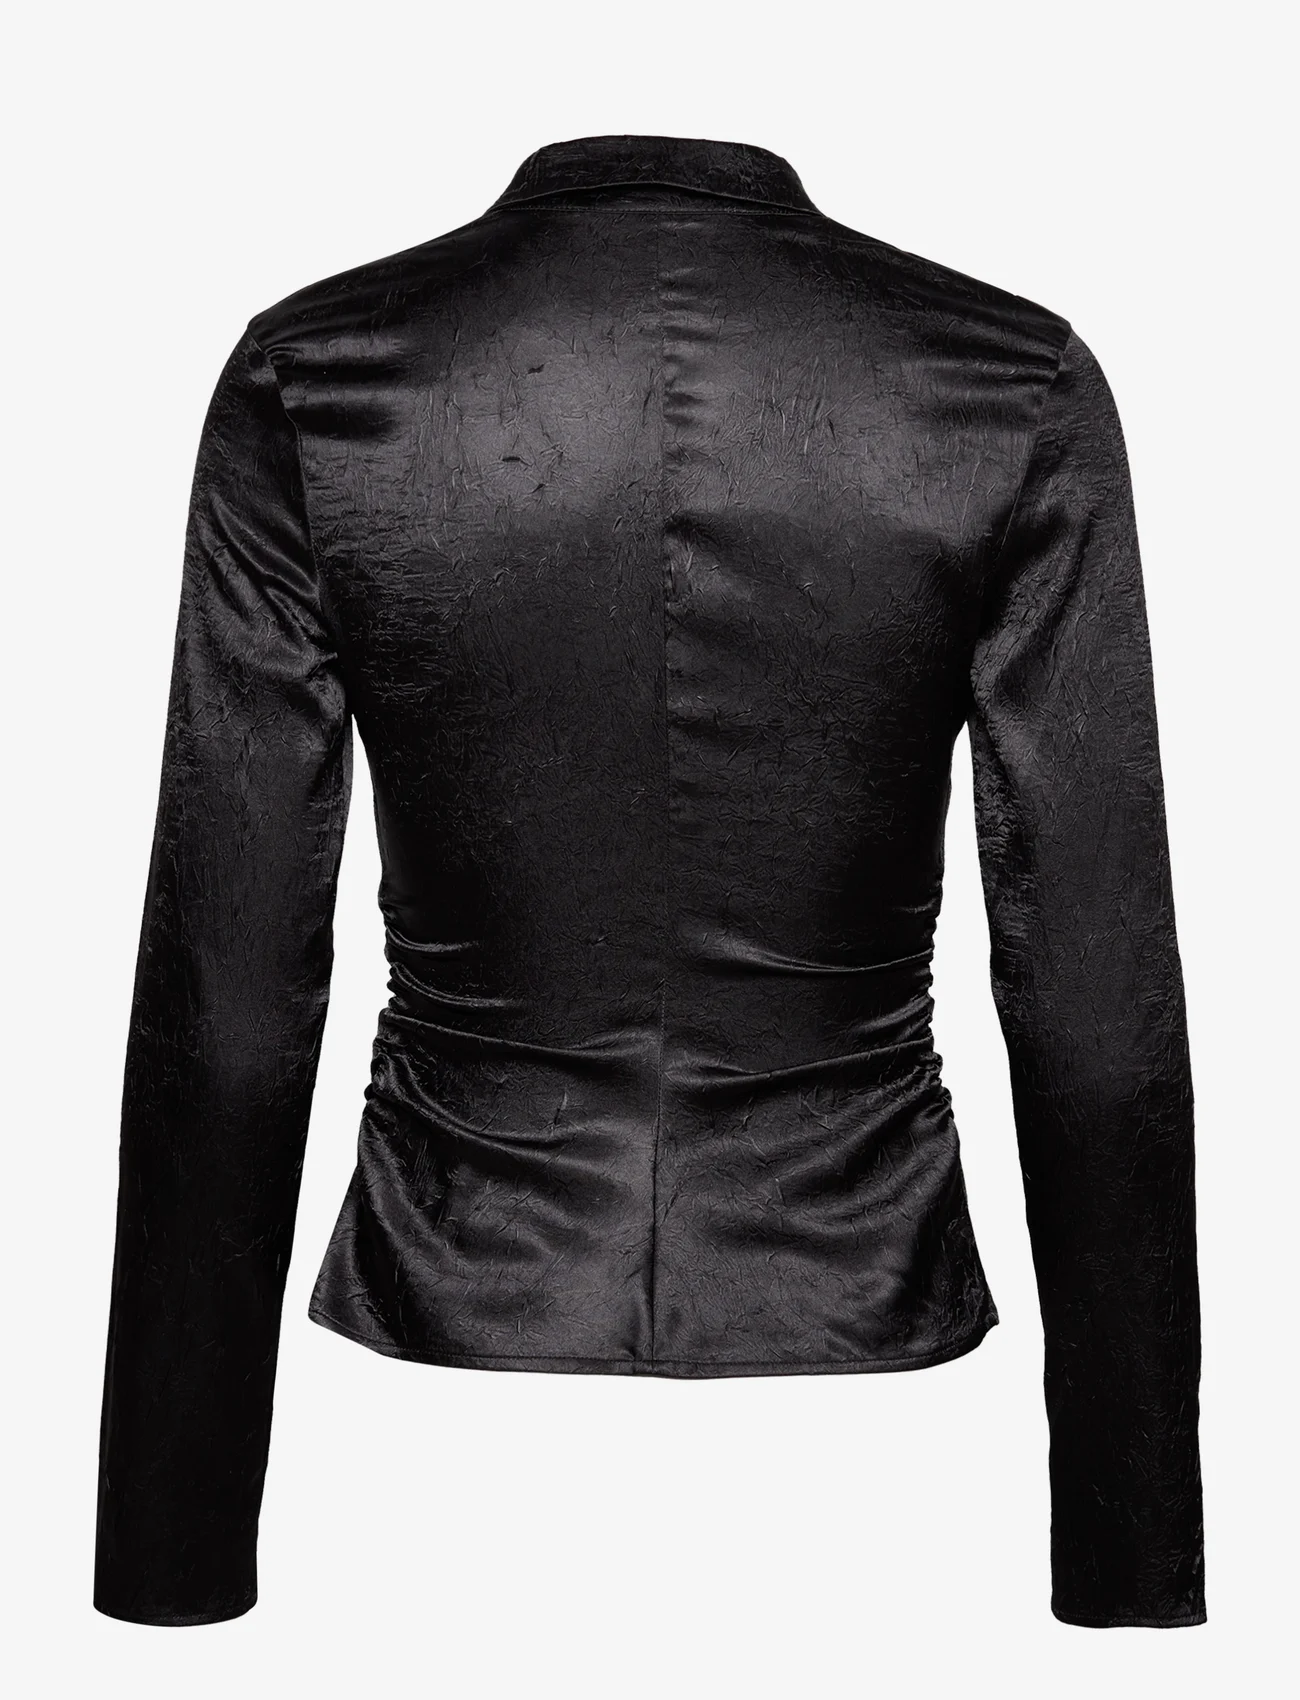 Samsøe Samsøe - Ivana blouse 14569 - pitkähihaiset paidat - obsidian - 1